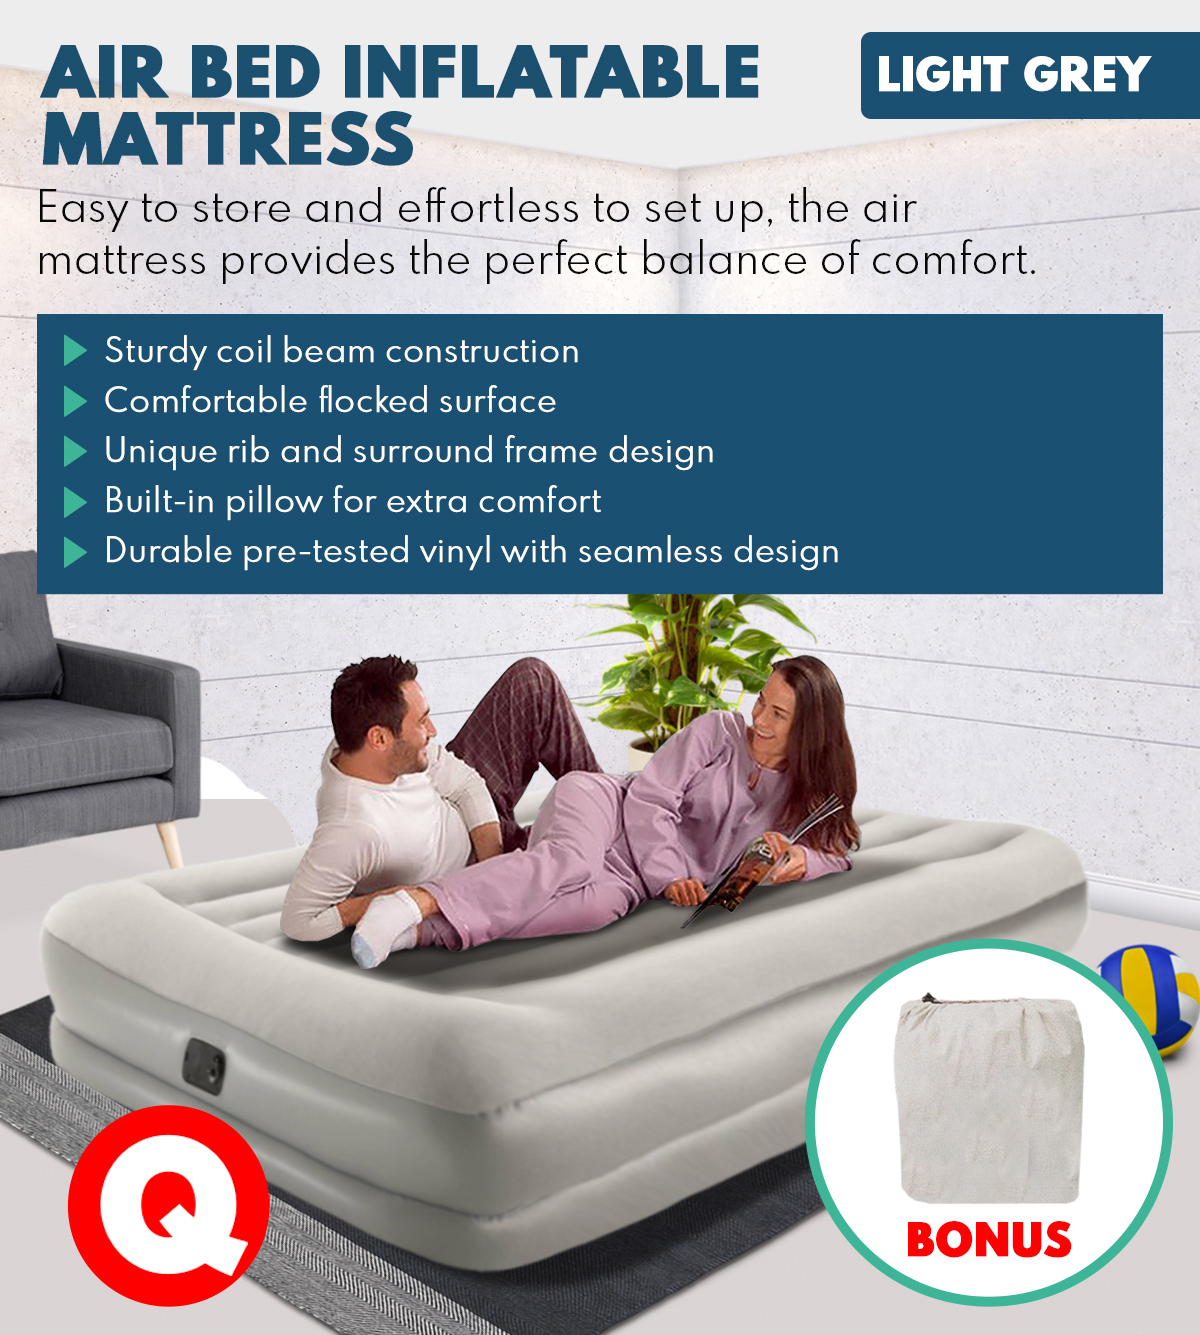 Queen Air Bed Inflatable Mattresses Home Camping Mats Sleeping Light Grey